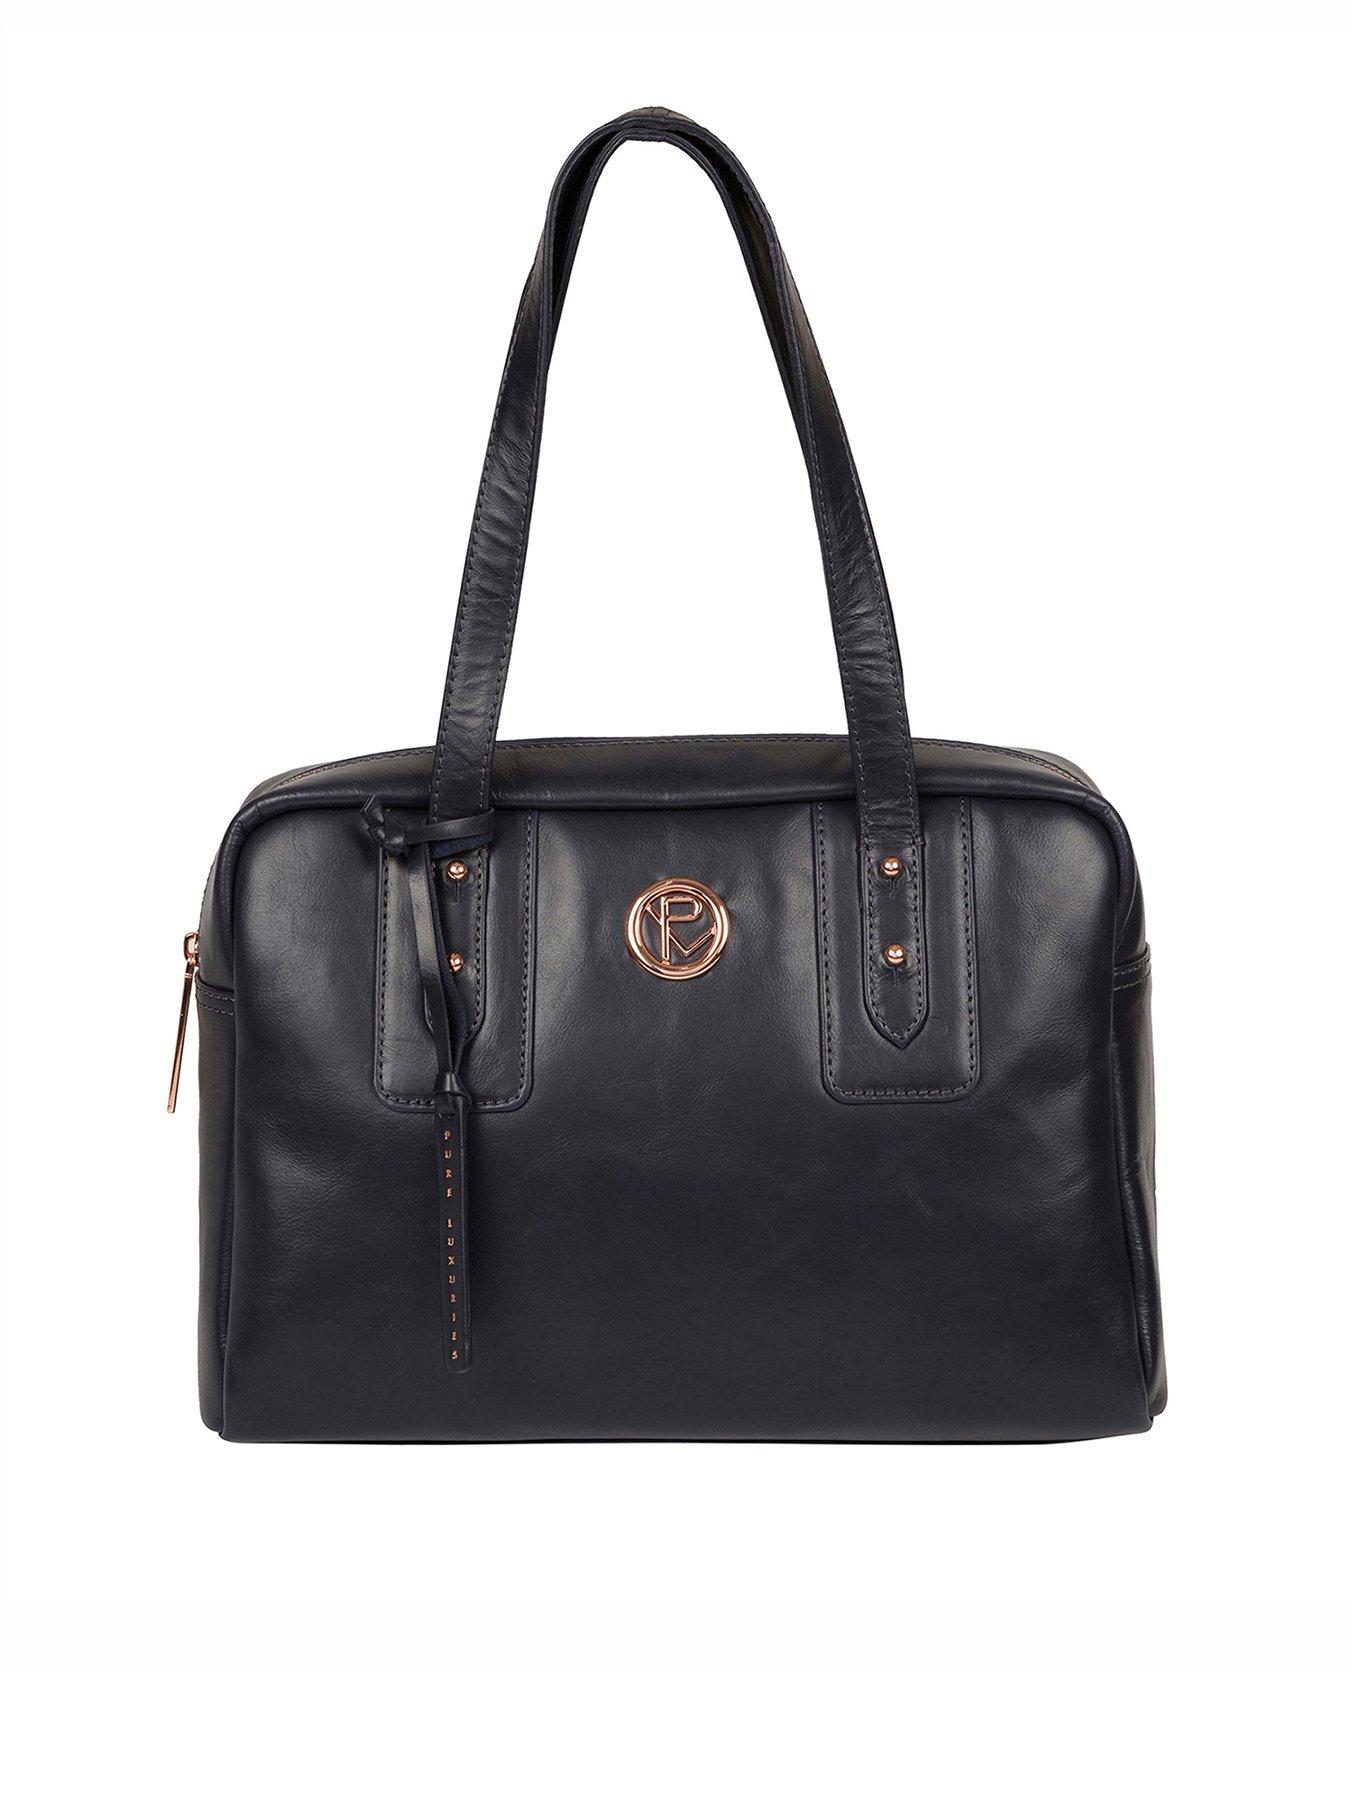 Bags & Purses Madox Zip Top Leather Handbag - Navy